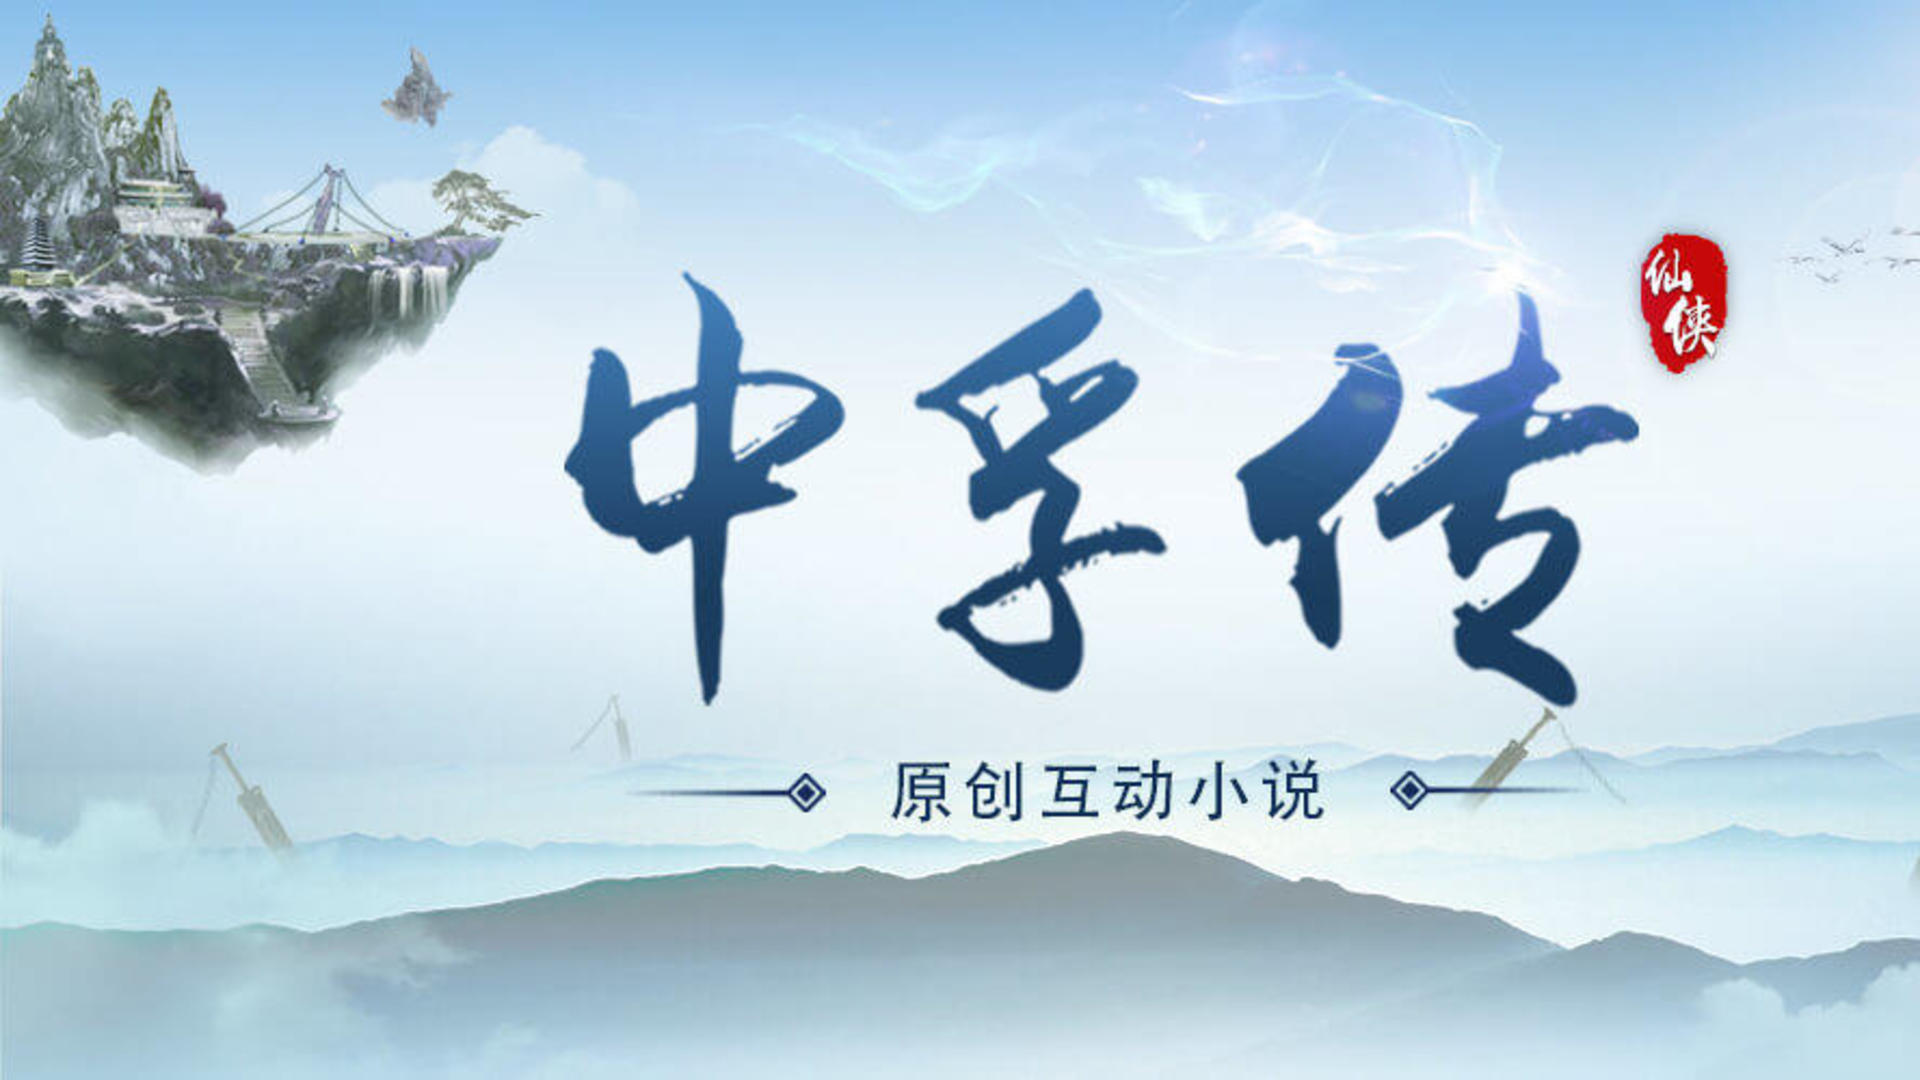 Banner of Zhongfu 전기 